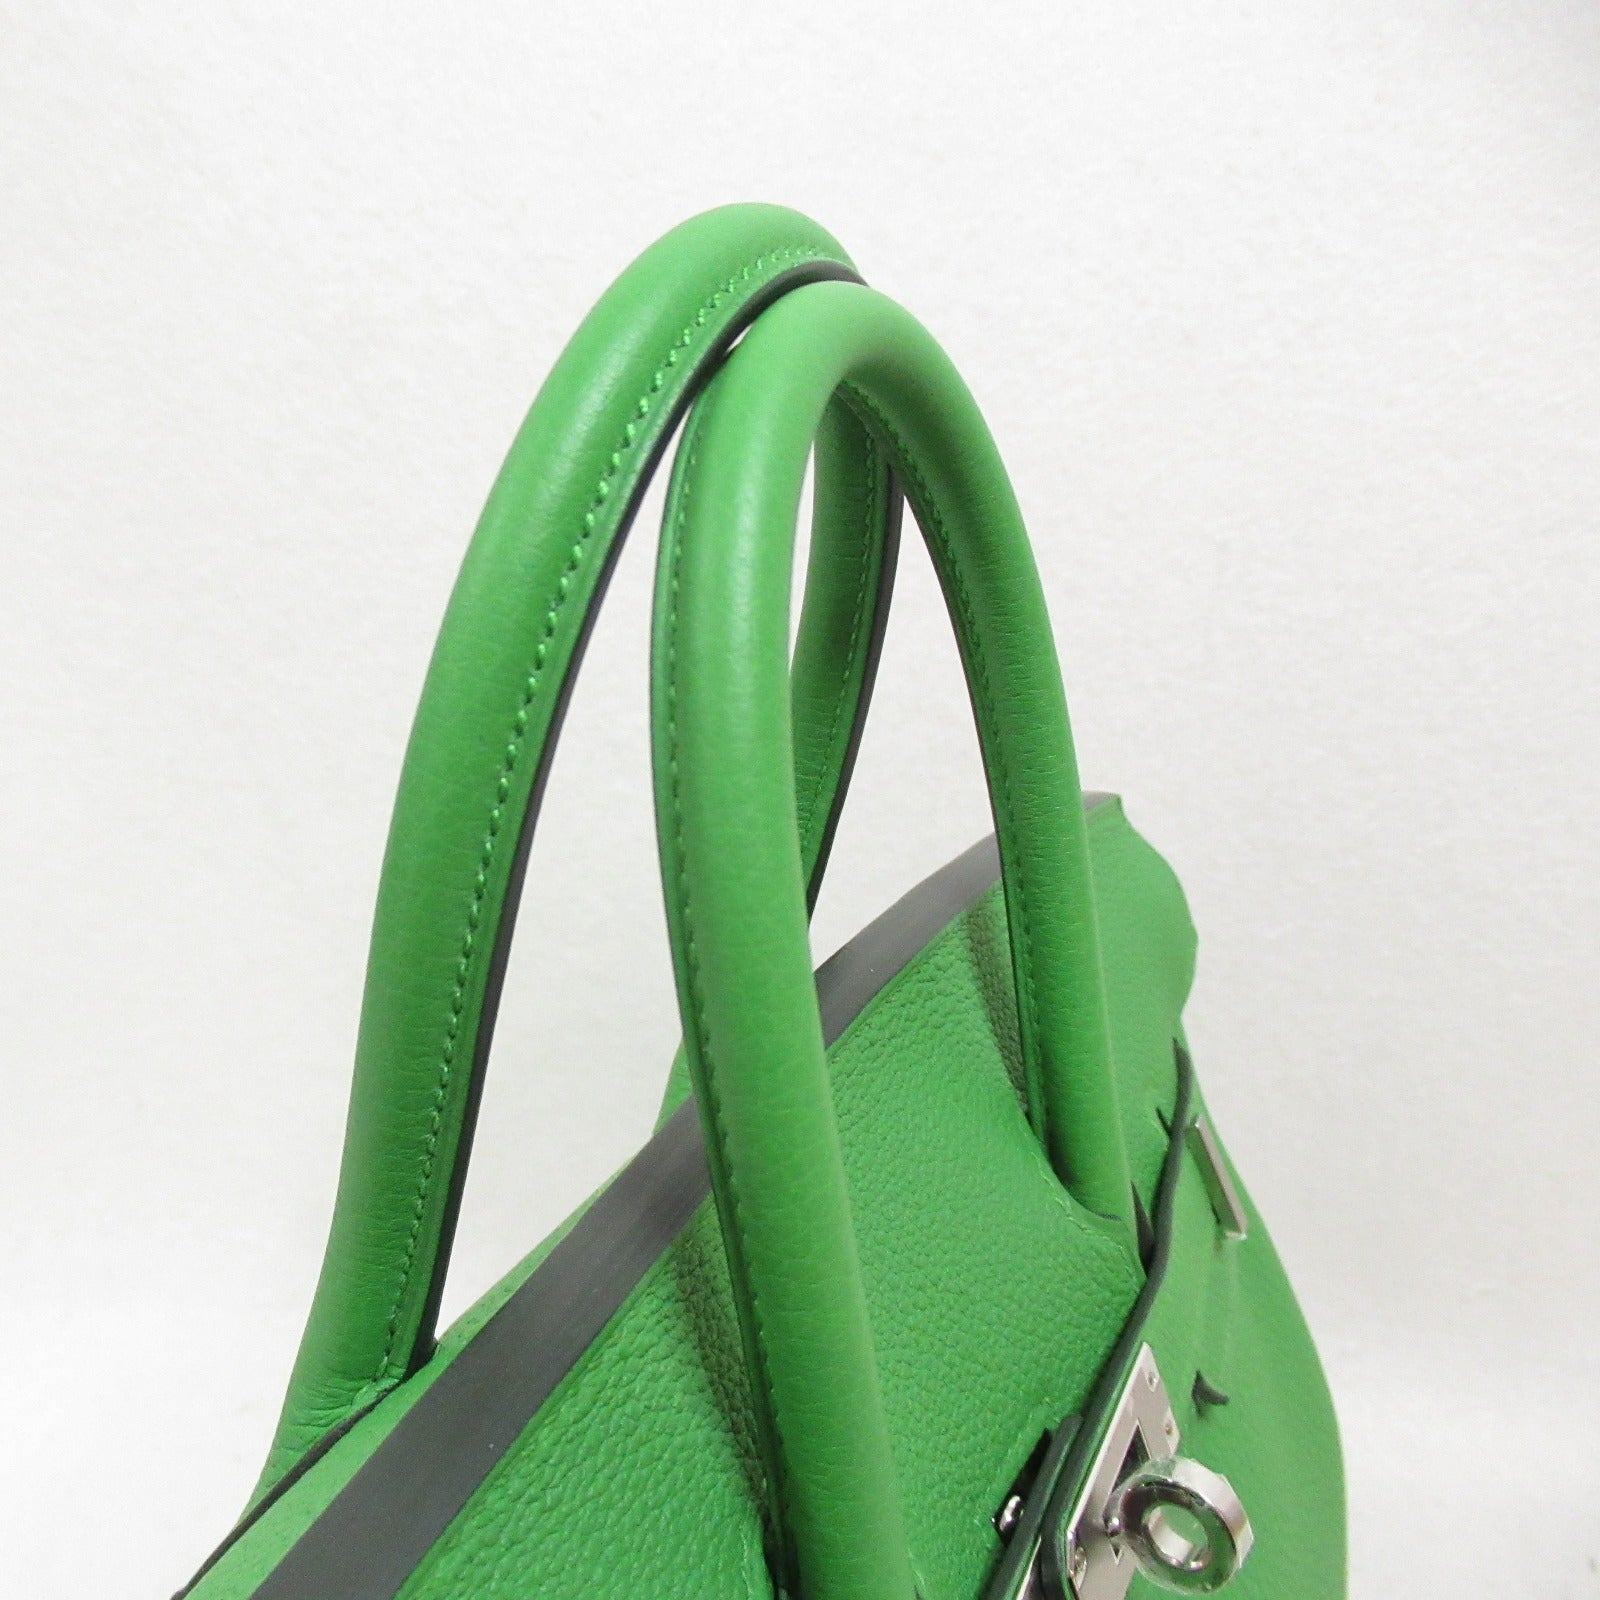 Hermes Hermes Birkin 25 Vel Yuka Handbag Handbag Handbag Leather Togo  Green